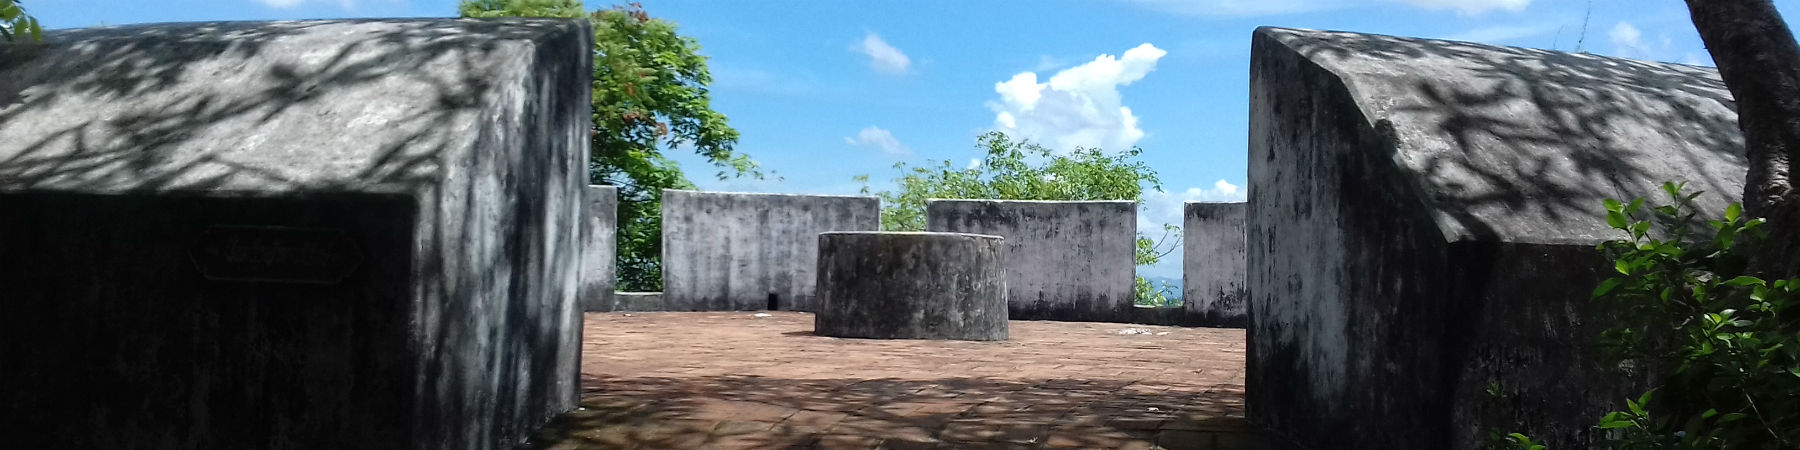 One of the forts at Phra Nakhon Kiri Historical Park, Phetchaburi